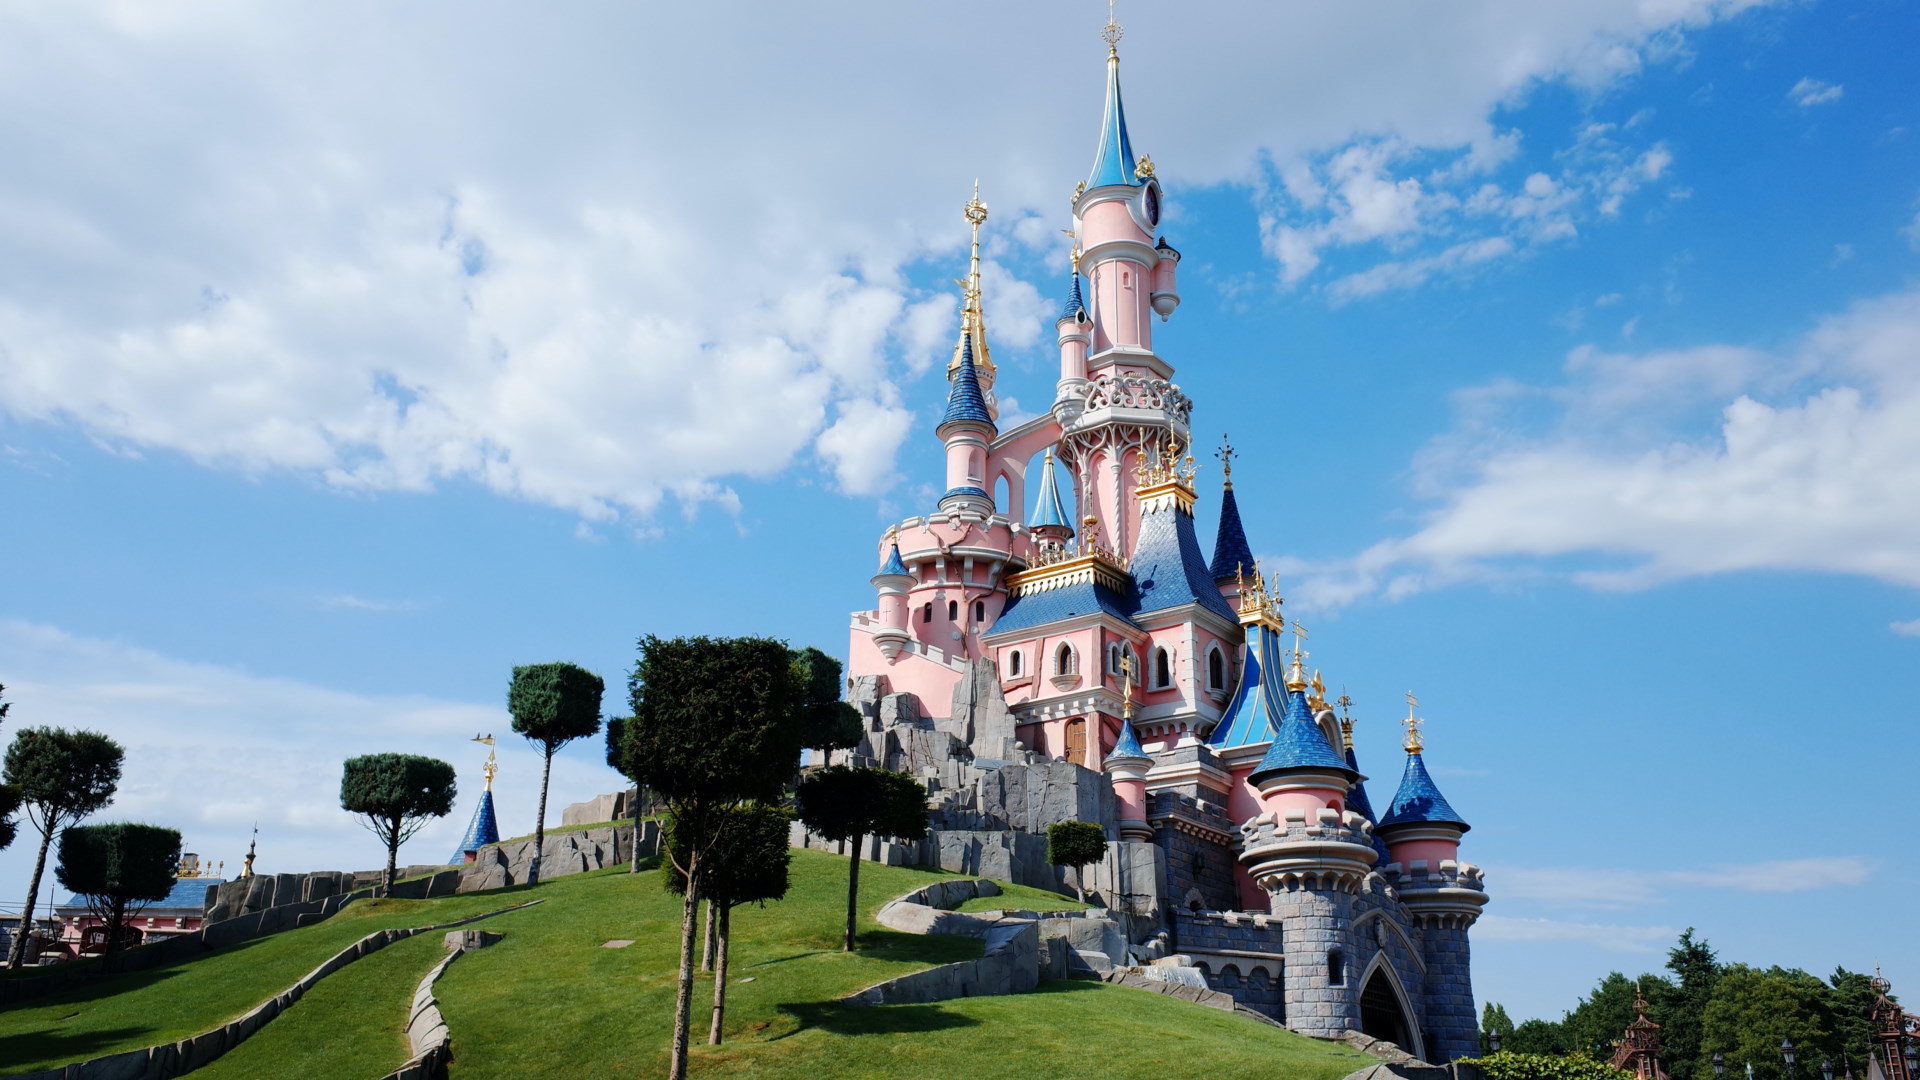 Sleeping Beauty Castle - Disneyland Paris